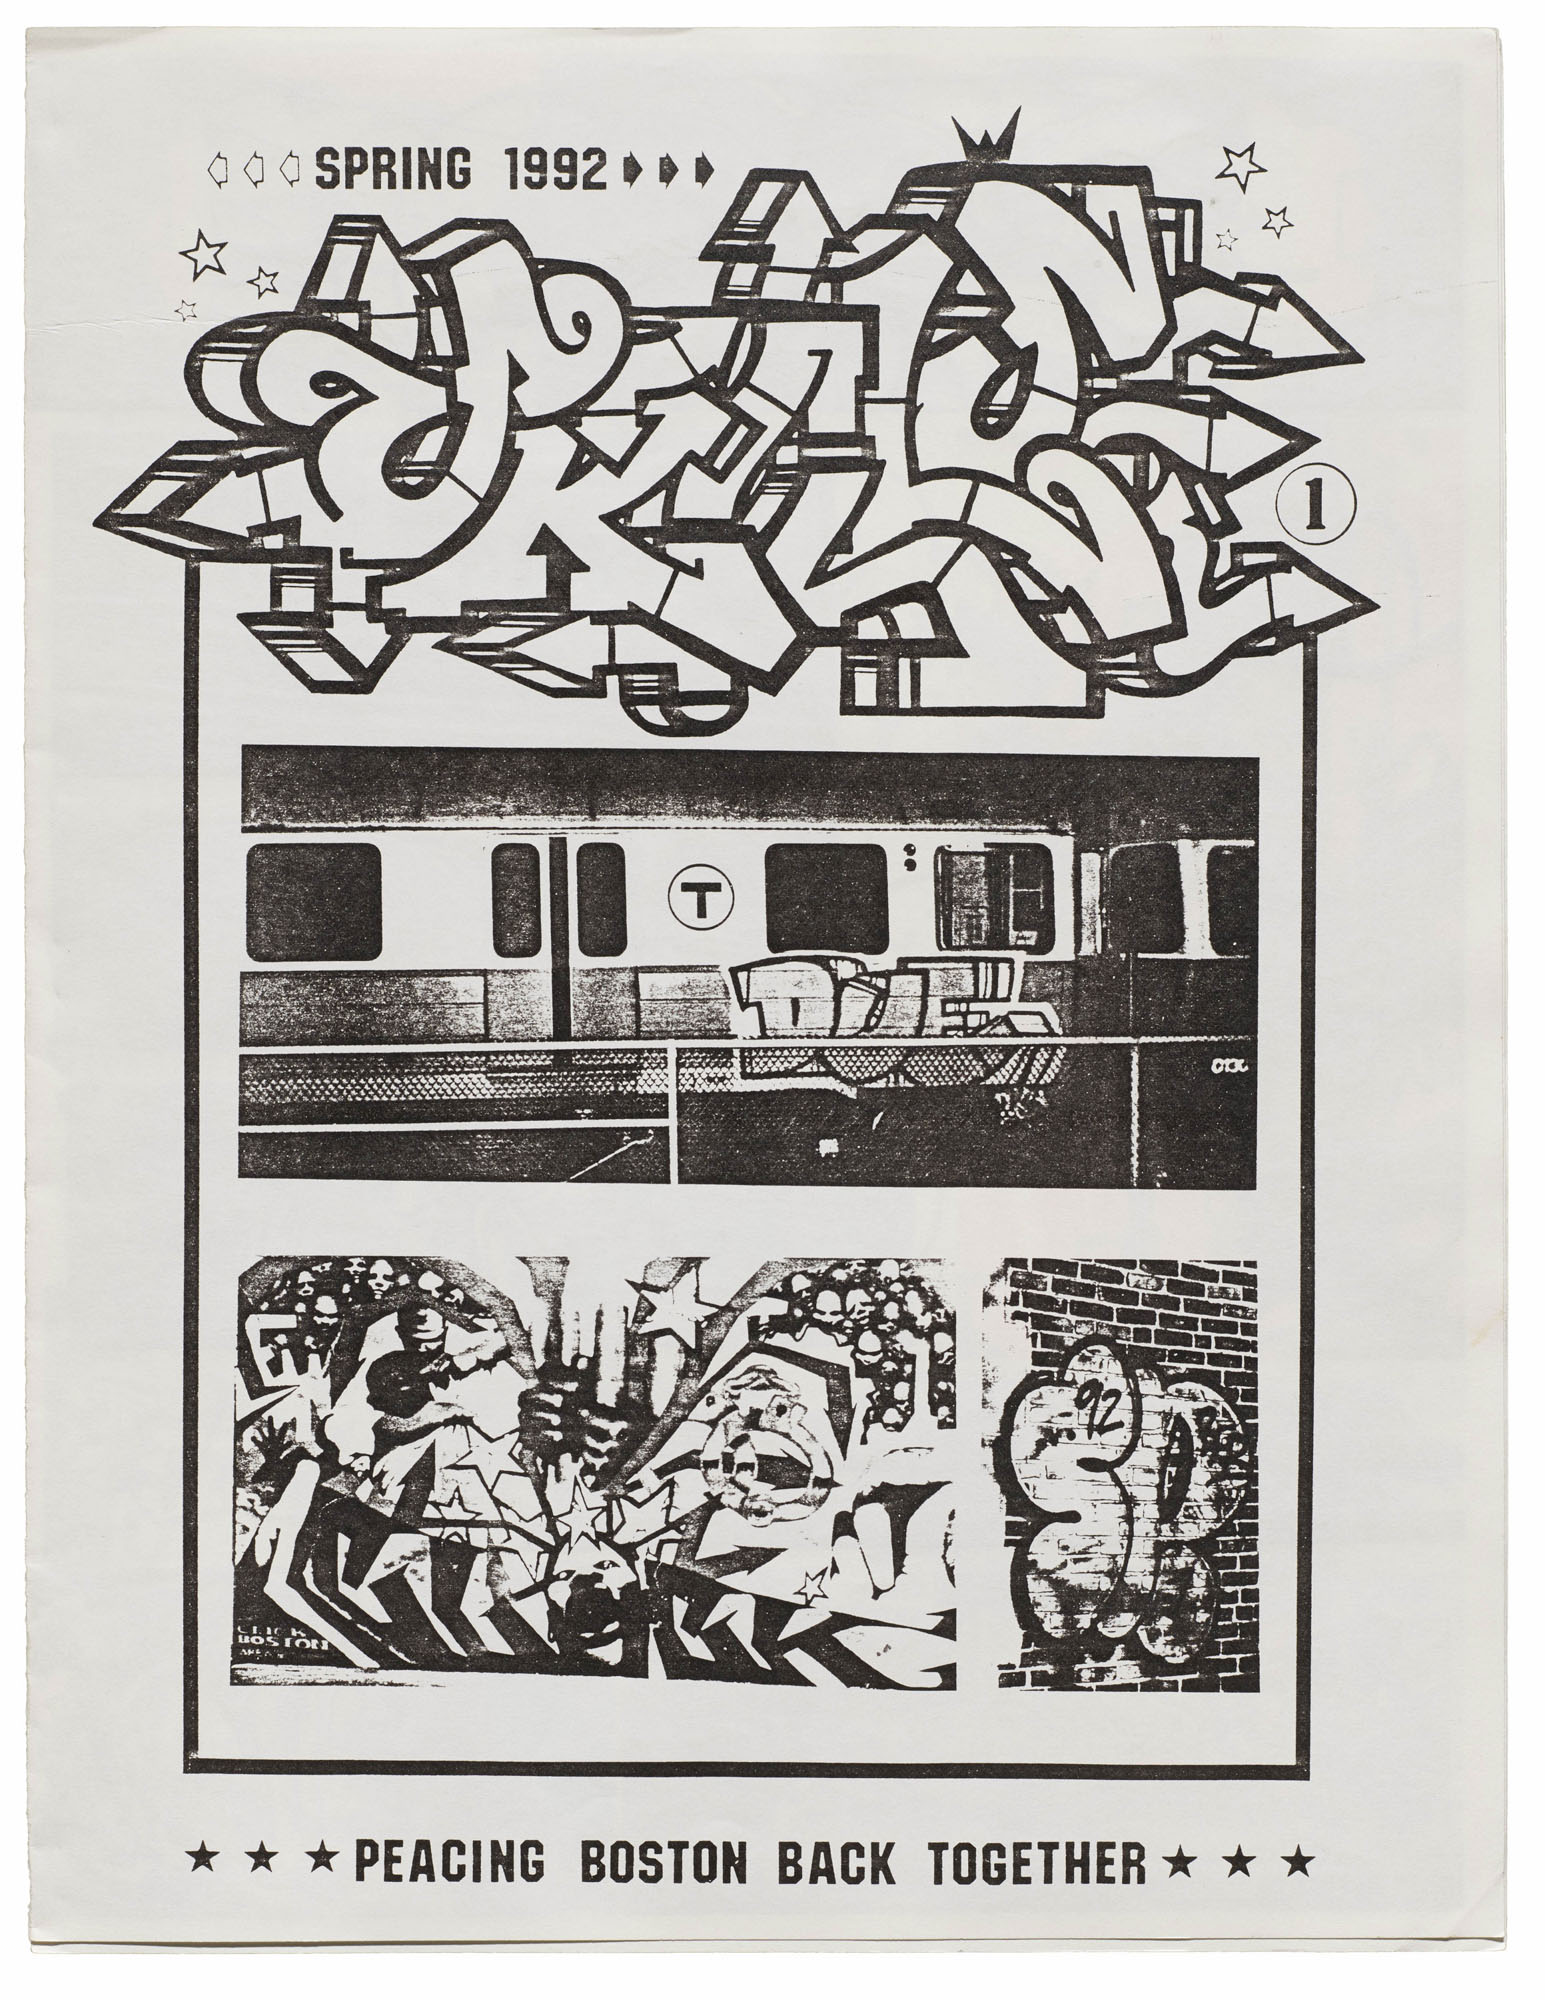 Sp.One / Greg Lamarche, Skills, issue 1, 1992, photocopy, Boston